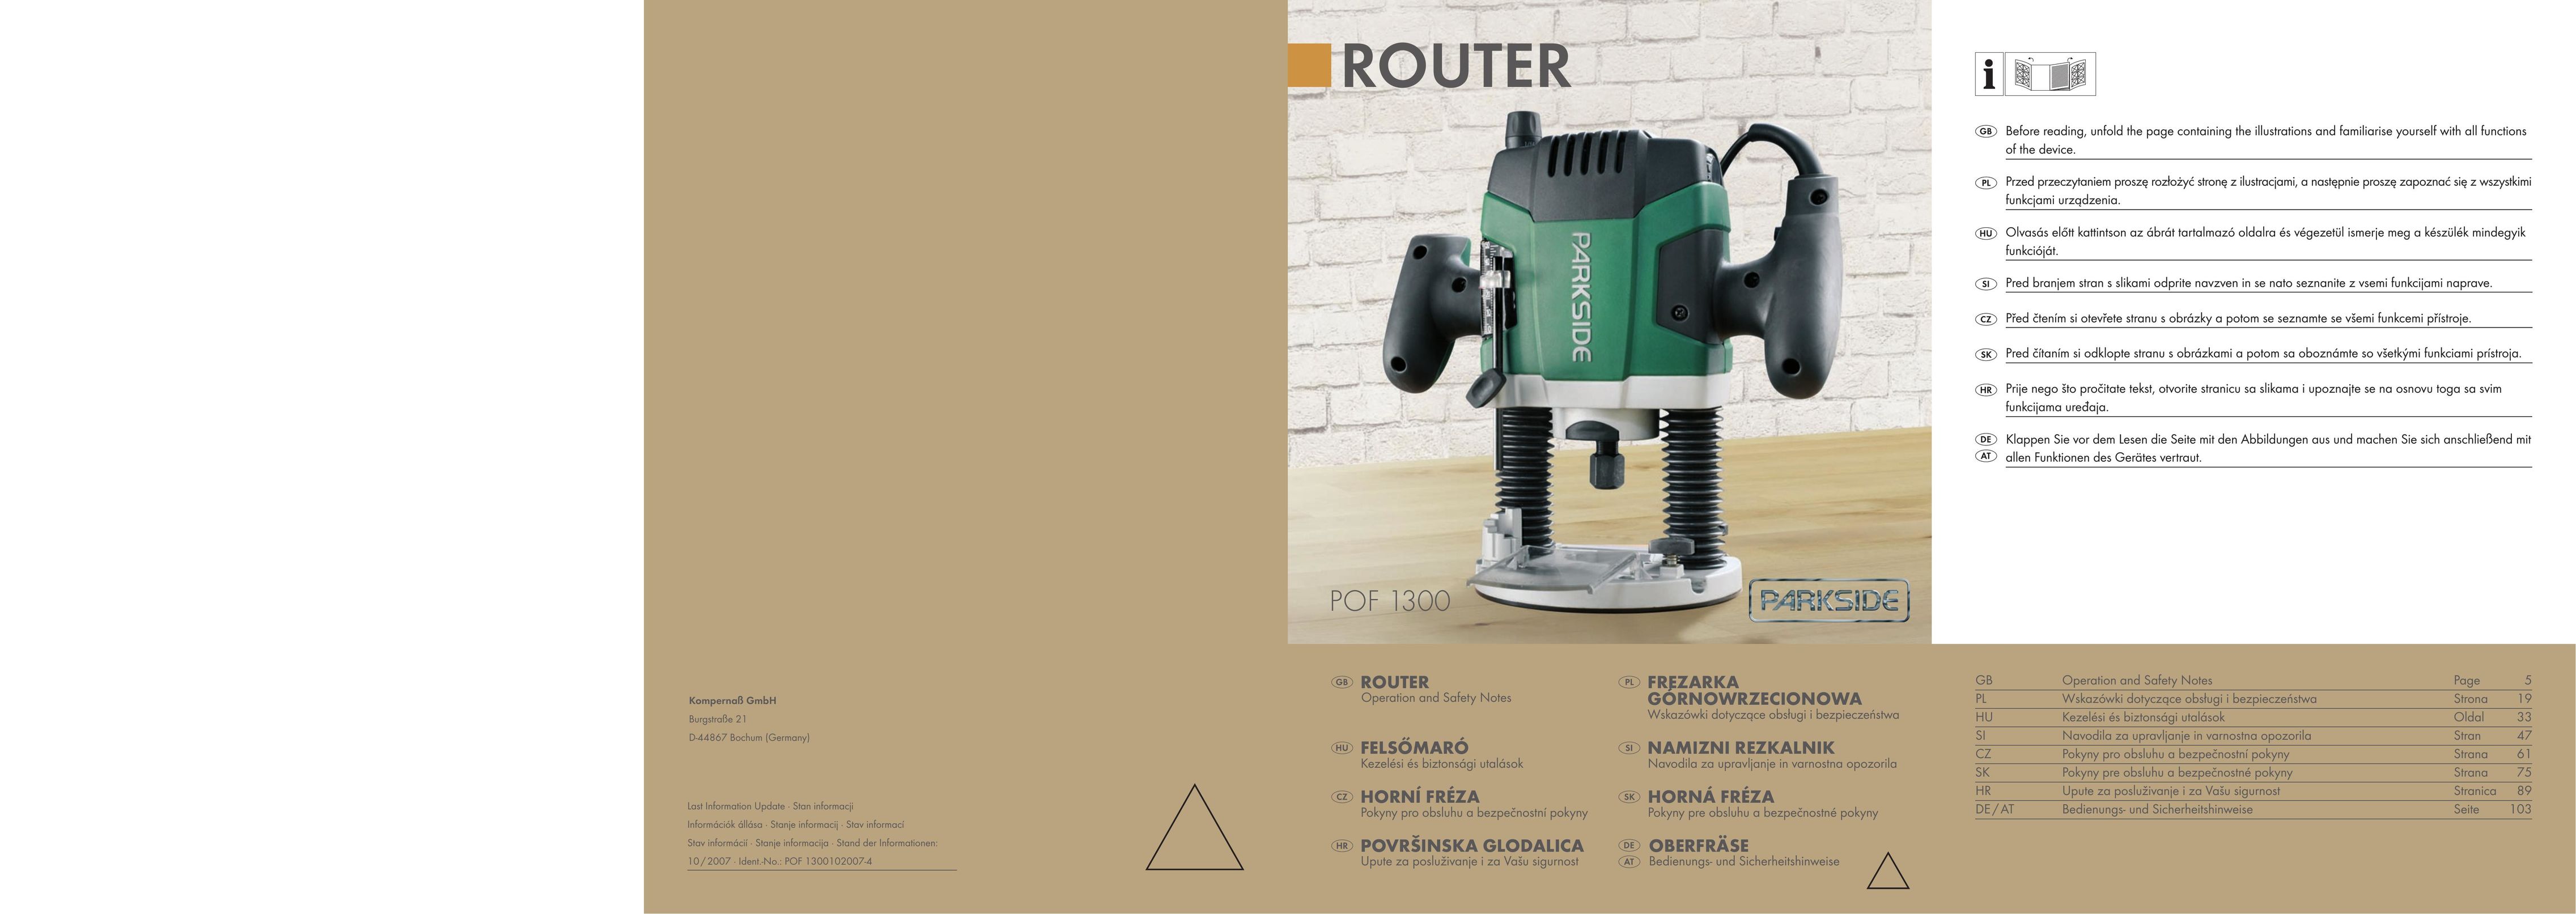 Kompernass POF1300 Router User Manual